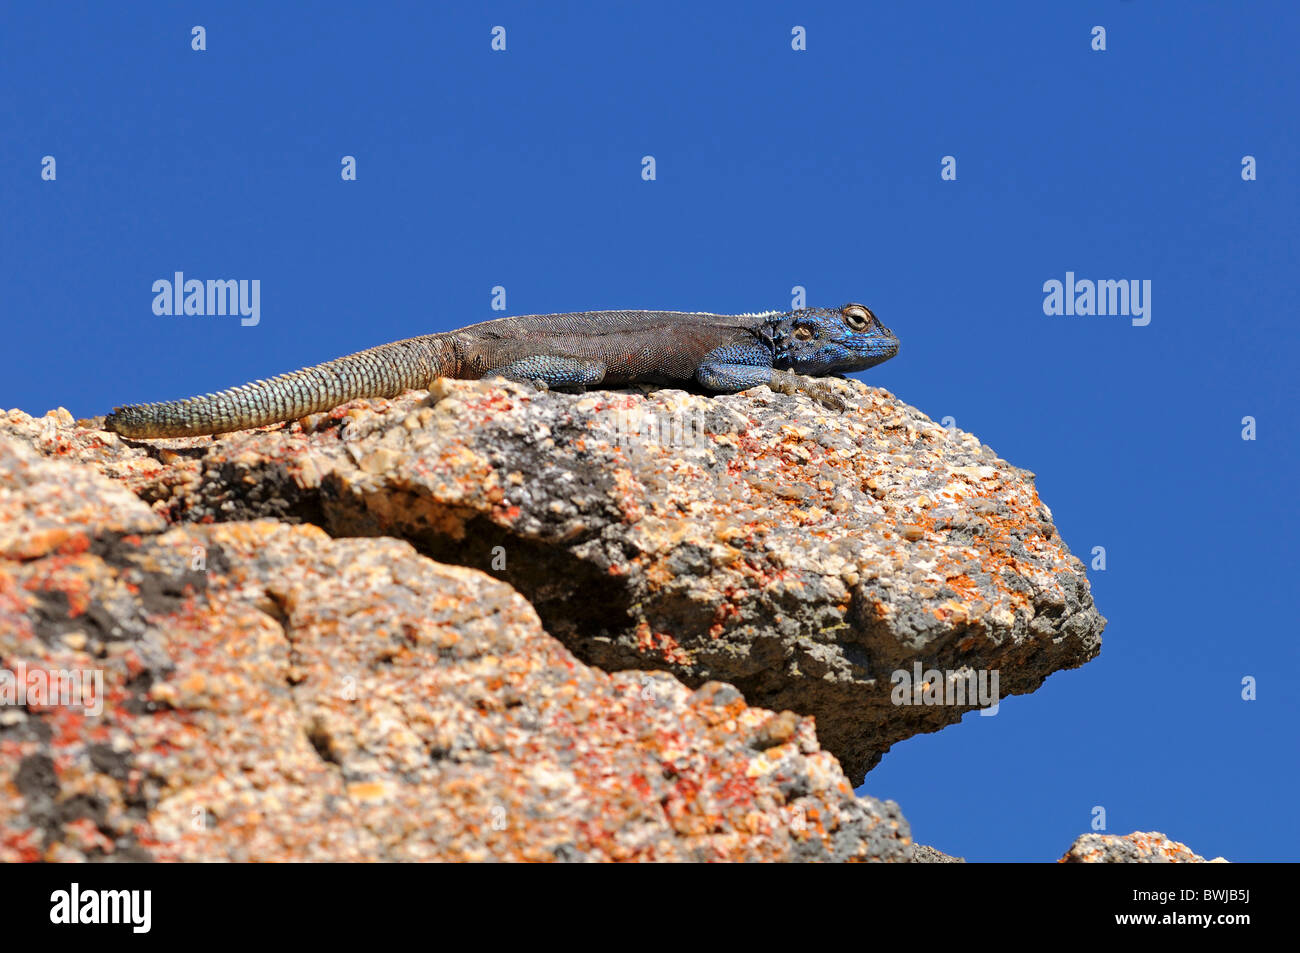 Rock sureño, Agama agama atra, macho, Namaqualand, Sudáfrica Foto de stock